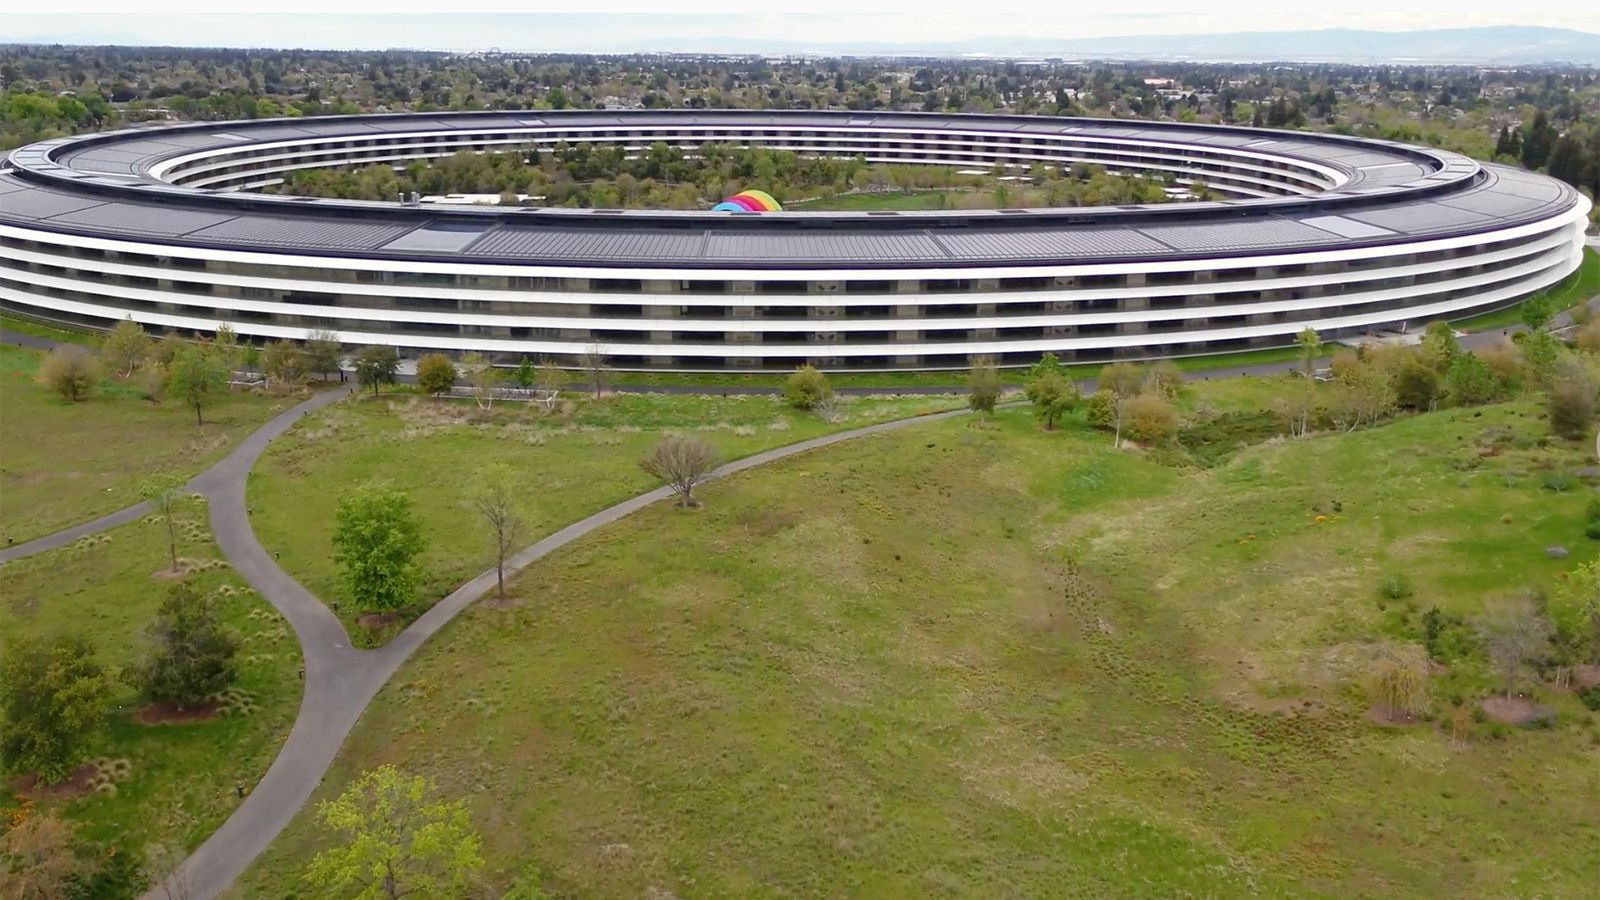 Drone Video Shows Empty Apple Park Campus